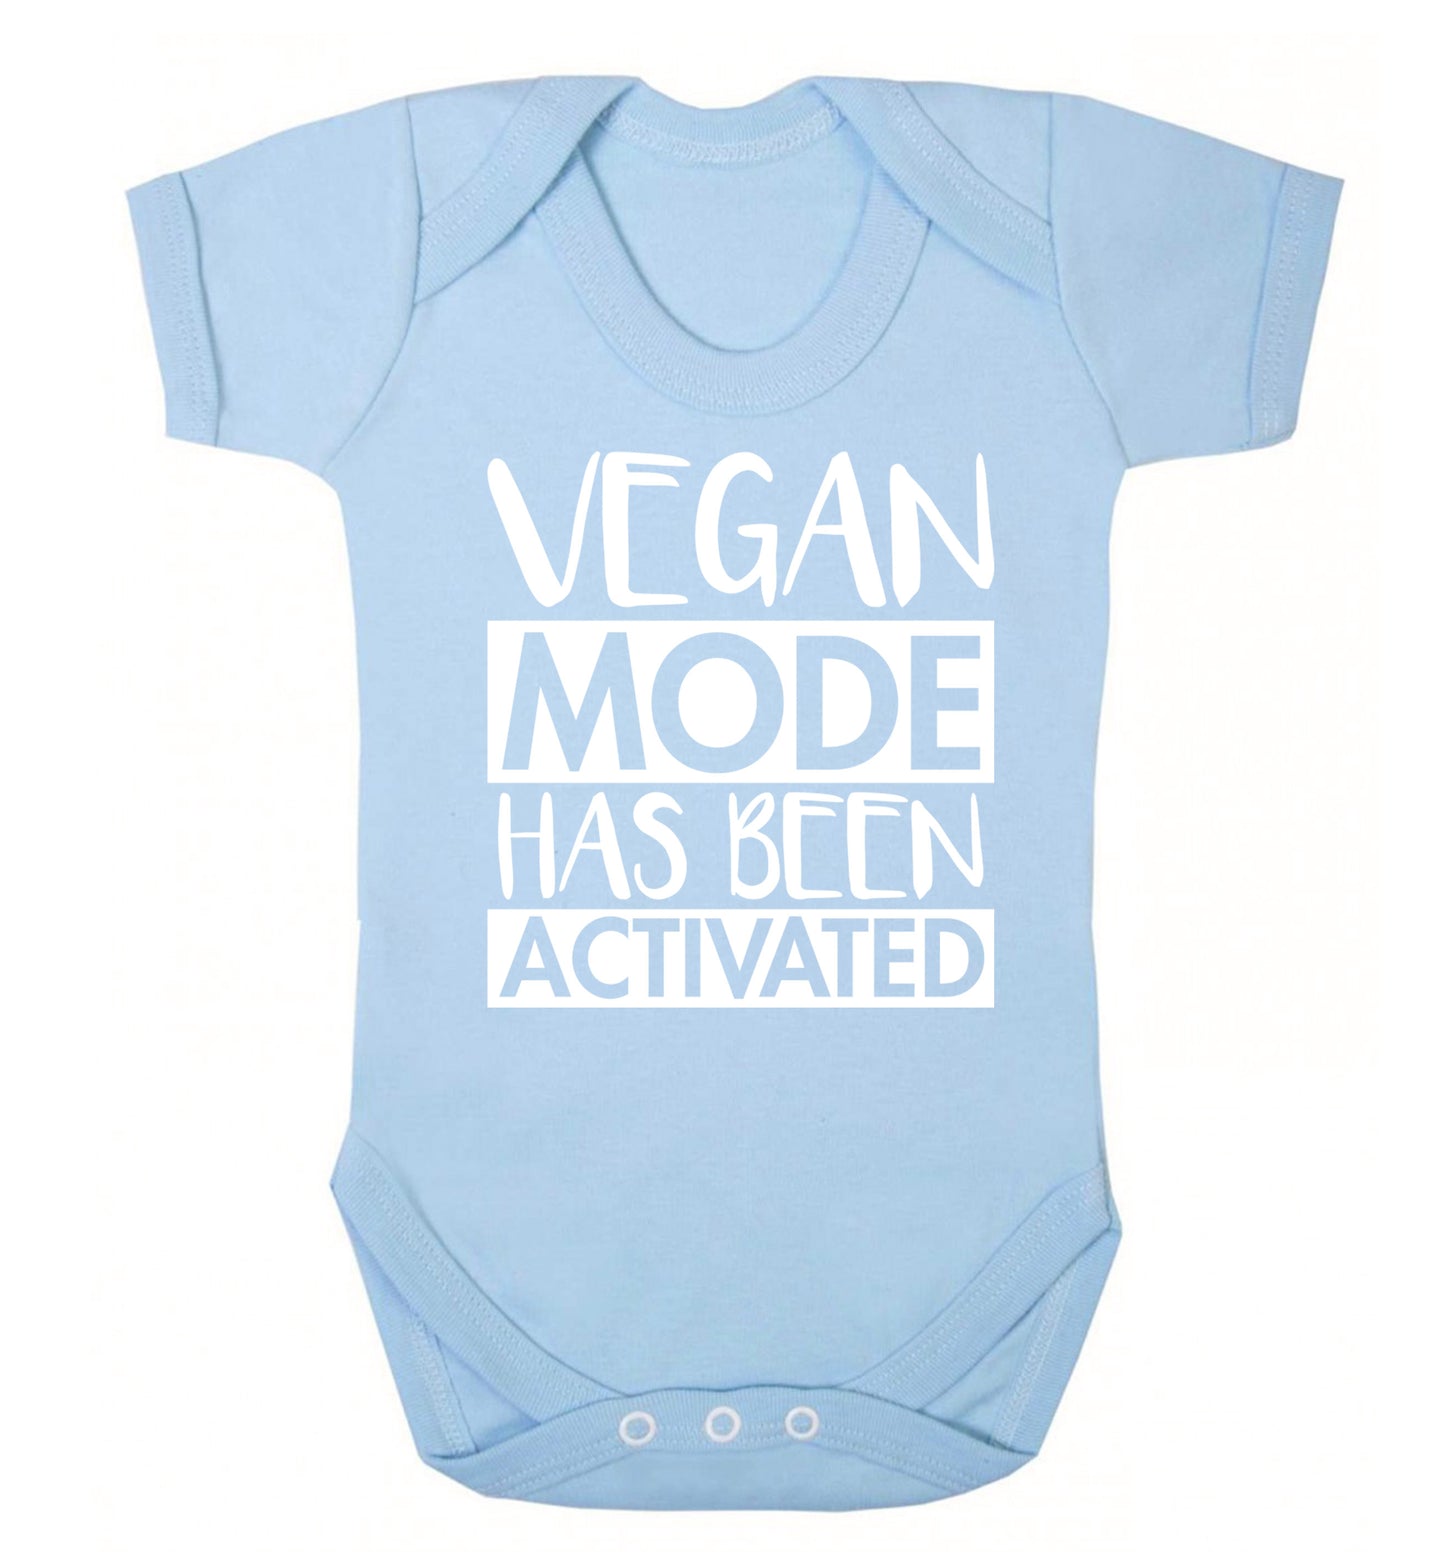 Vegan mode activated Baby Vest pale blue 18-24 months